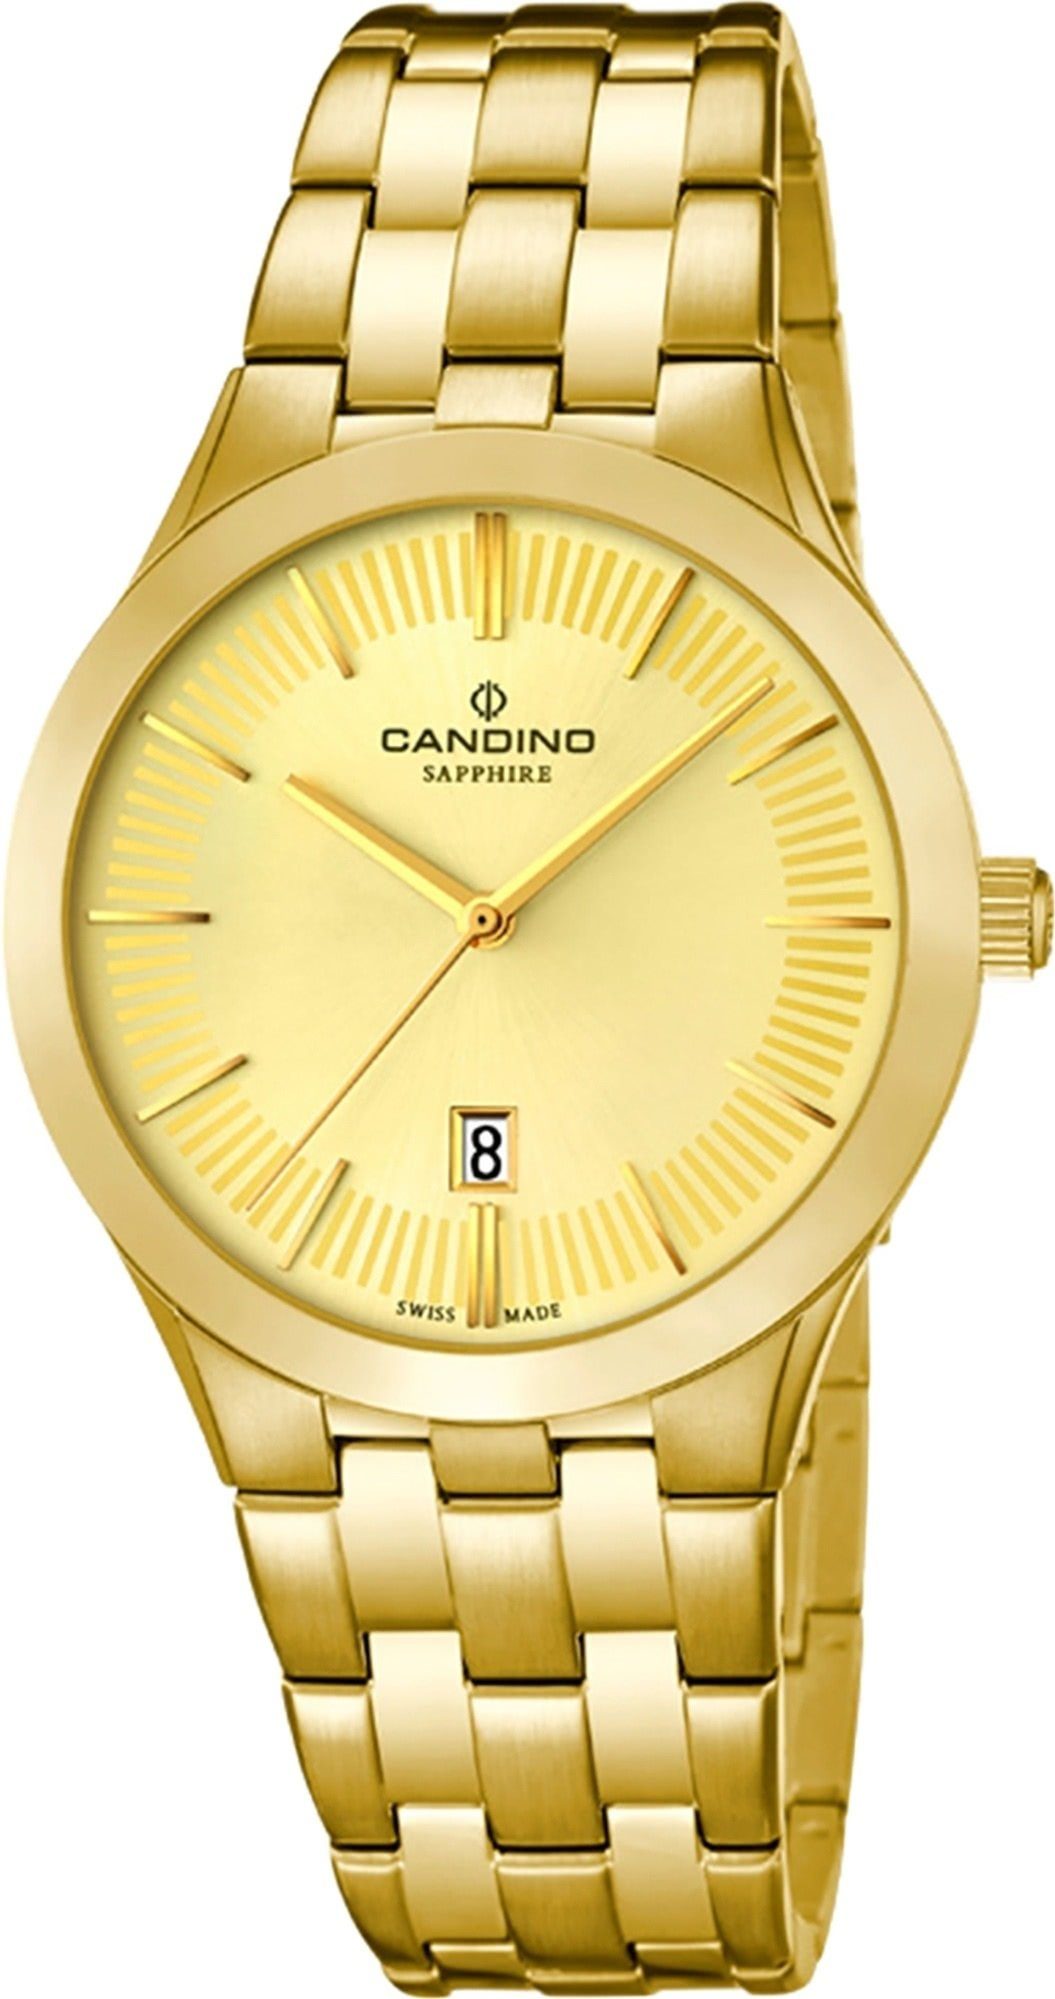 Candino C4545/2, Damen Armbanduhr Analog Quarzuhr gold, rund, Quarzuhr Edelstahlarmband Luxus Damen Candino